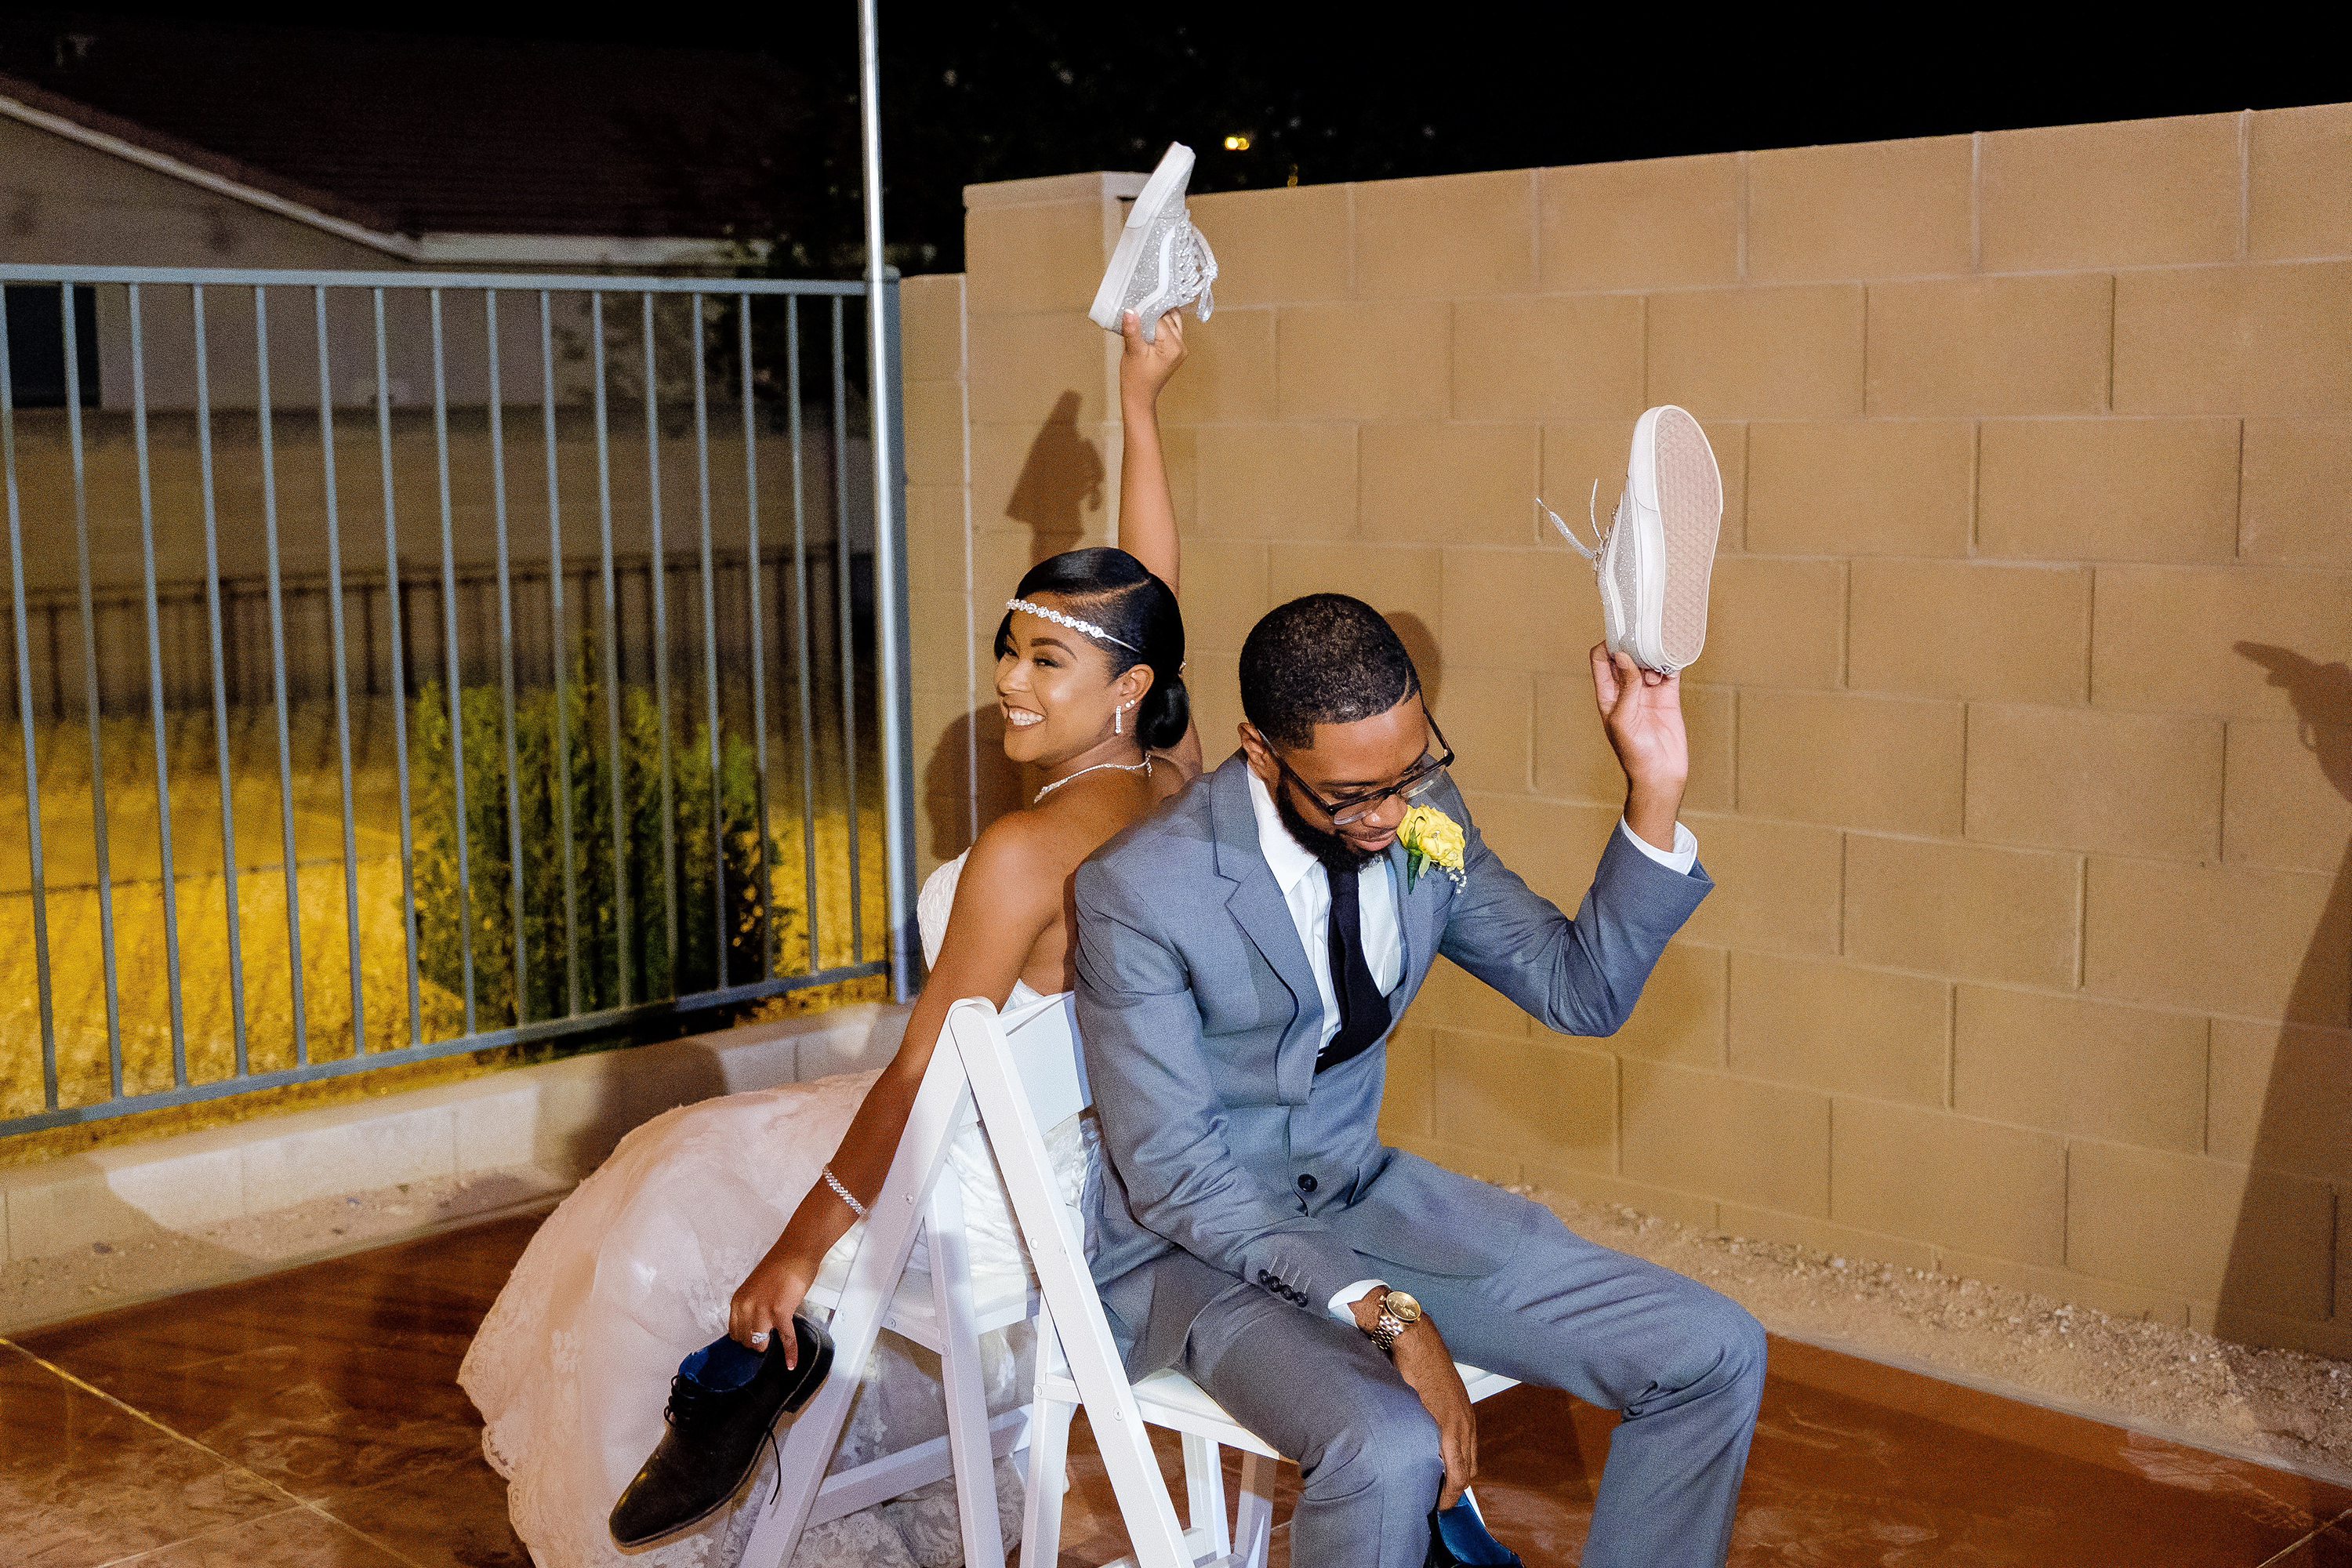 shoe game at a backyard wedding reception in Phoenix